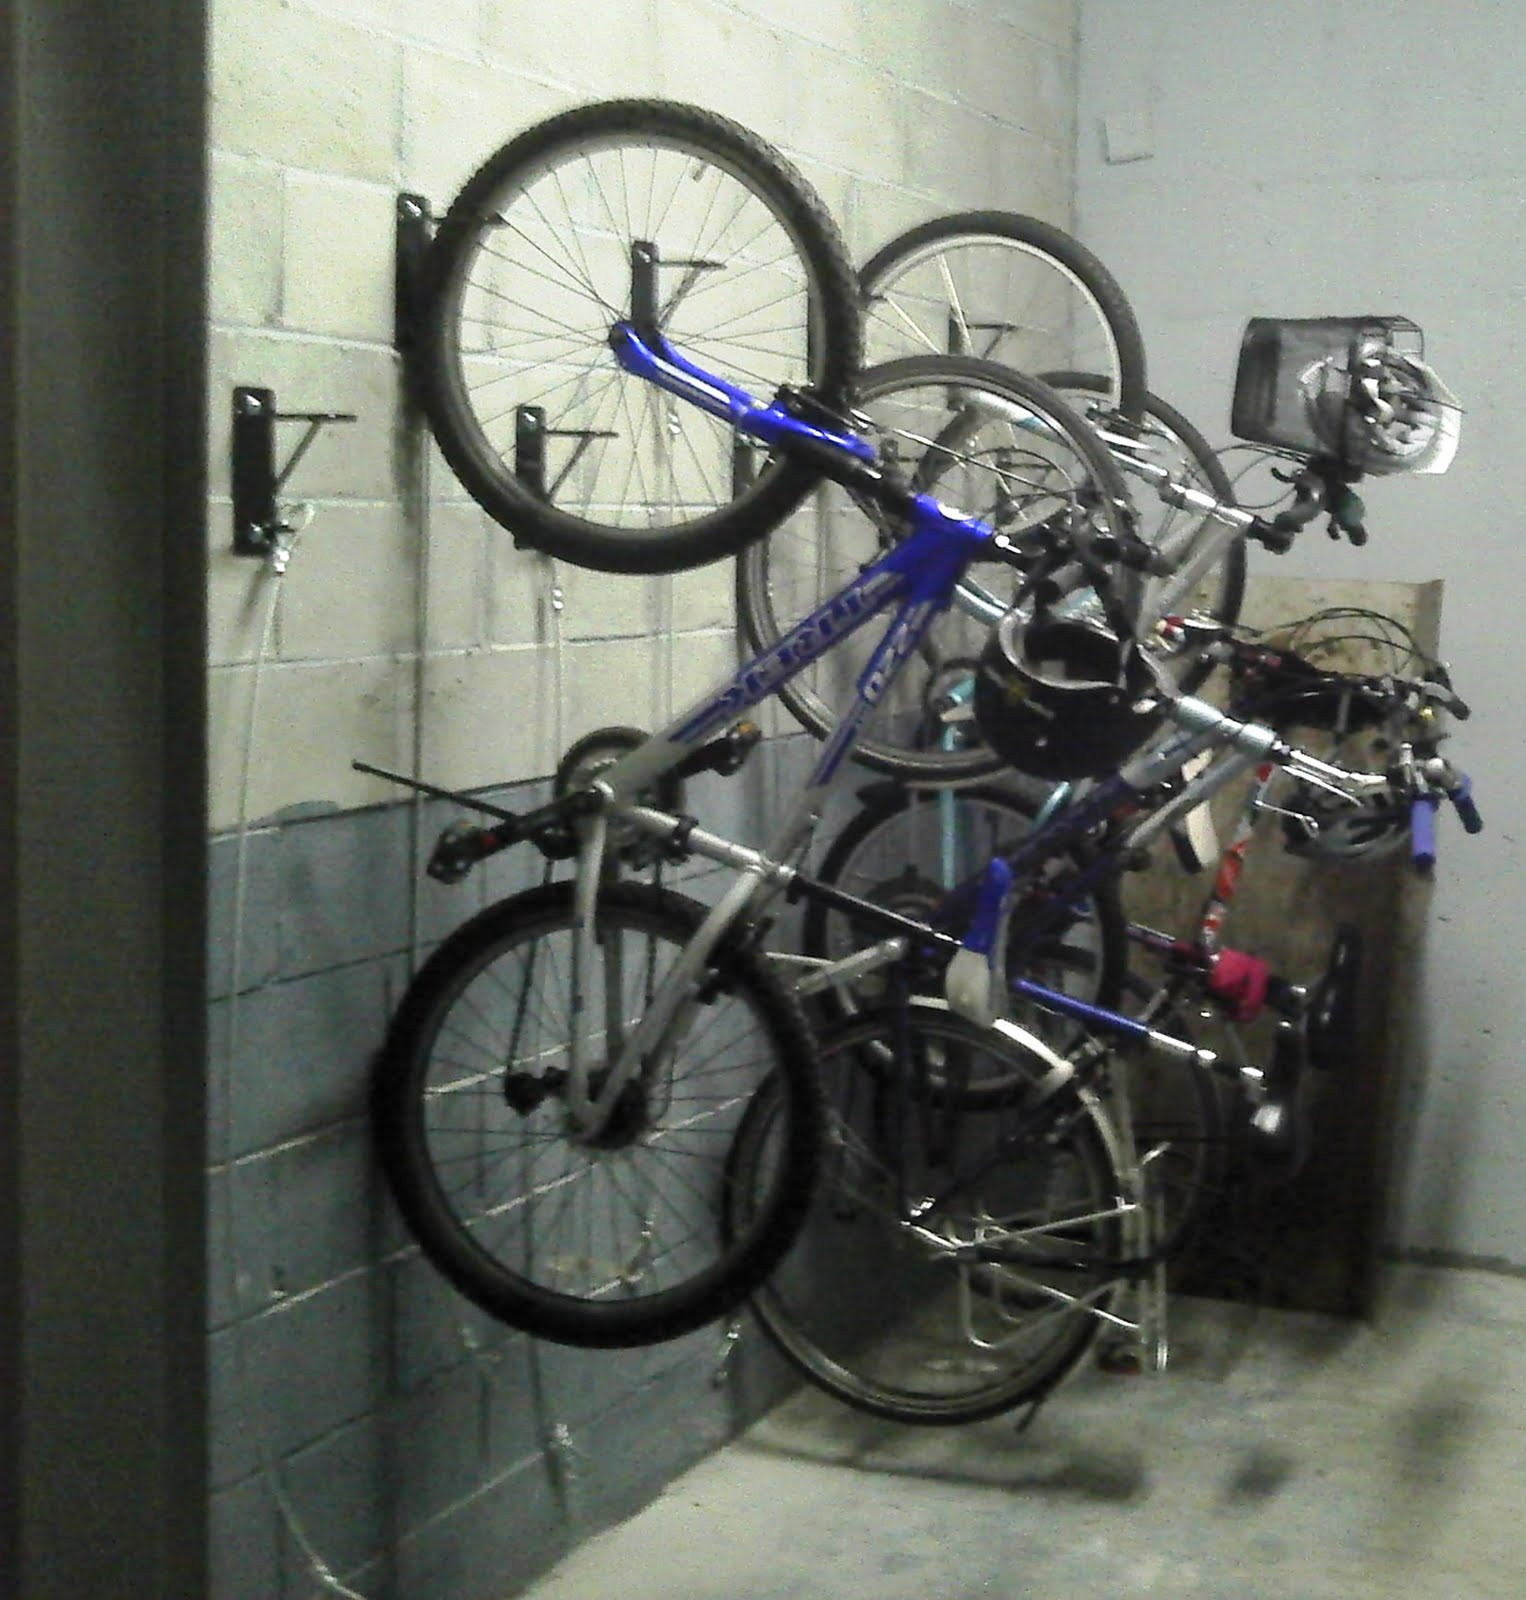 Wall Mount Bike Rack Storage